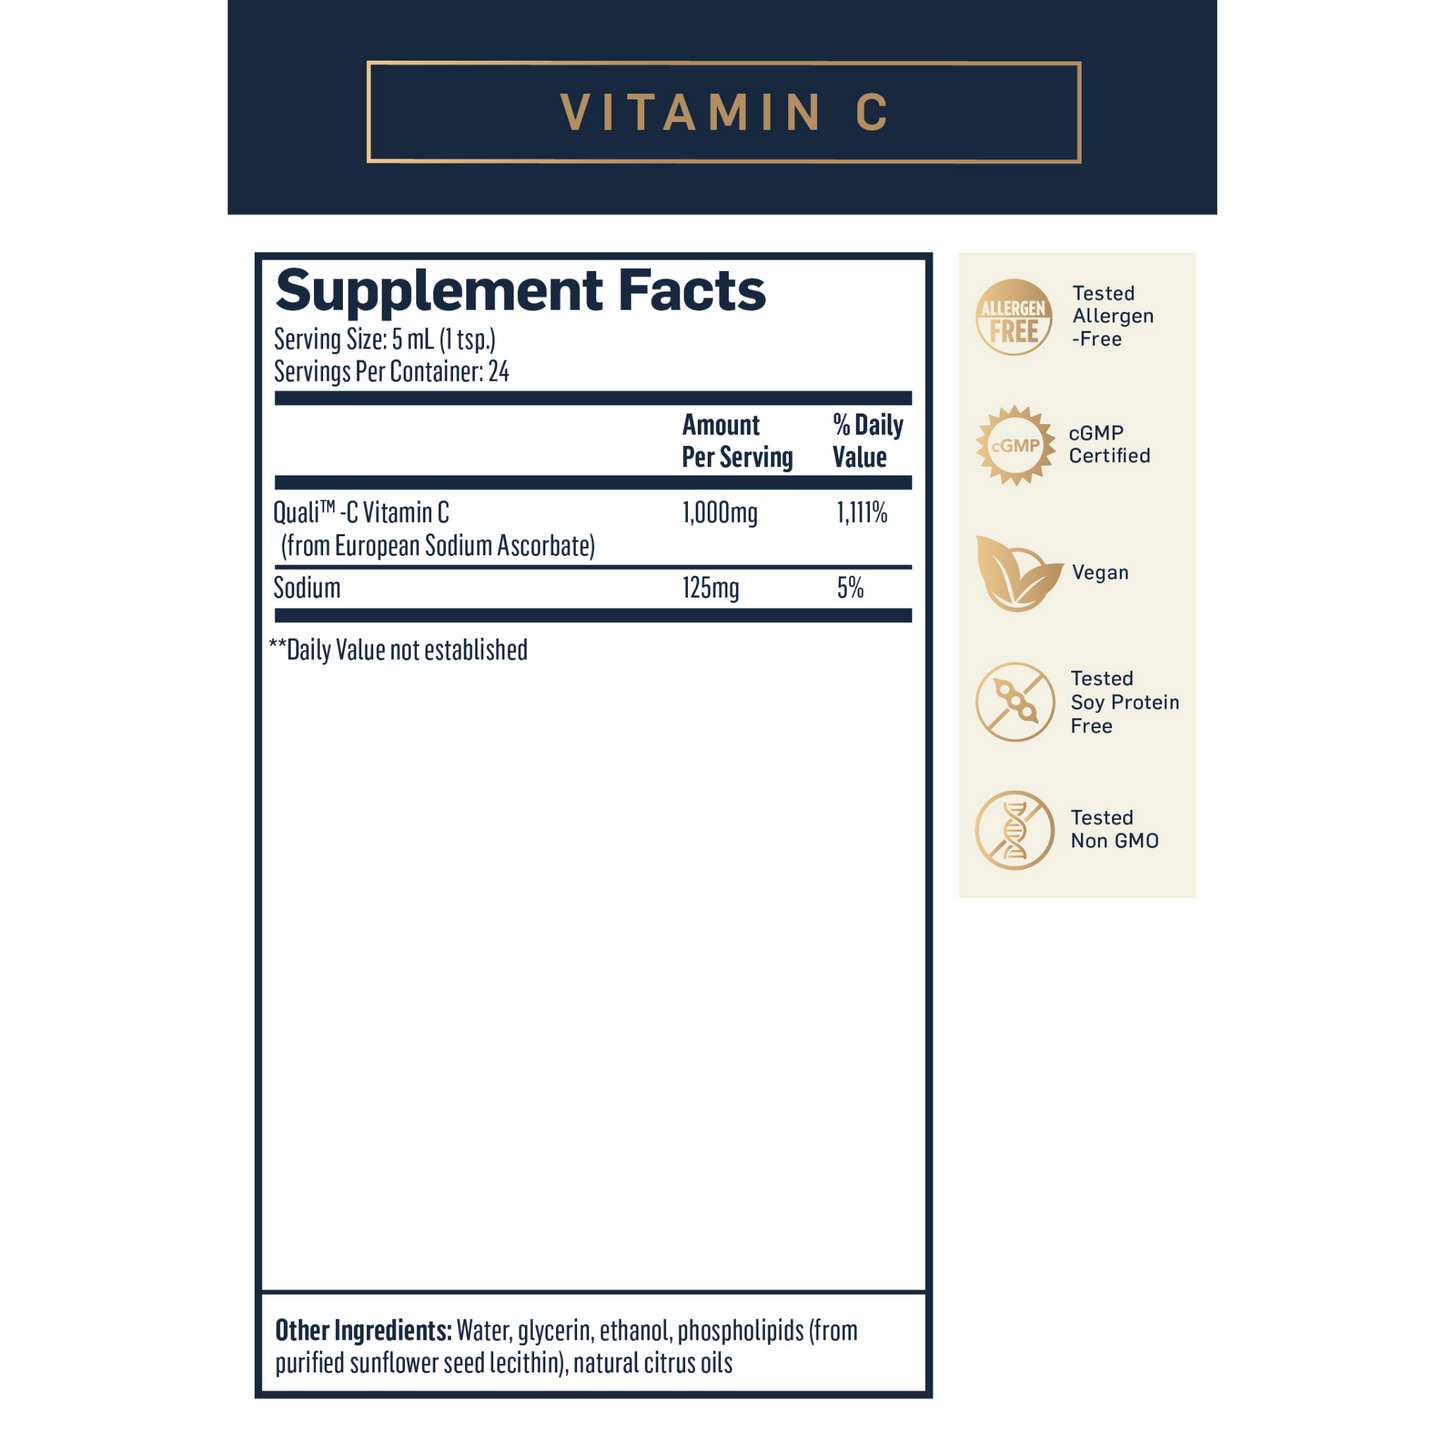 Liposomal Vitamin C Quicksilver Scientific